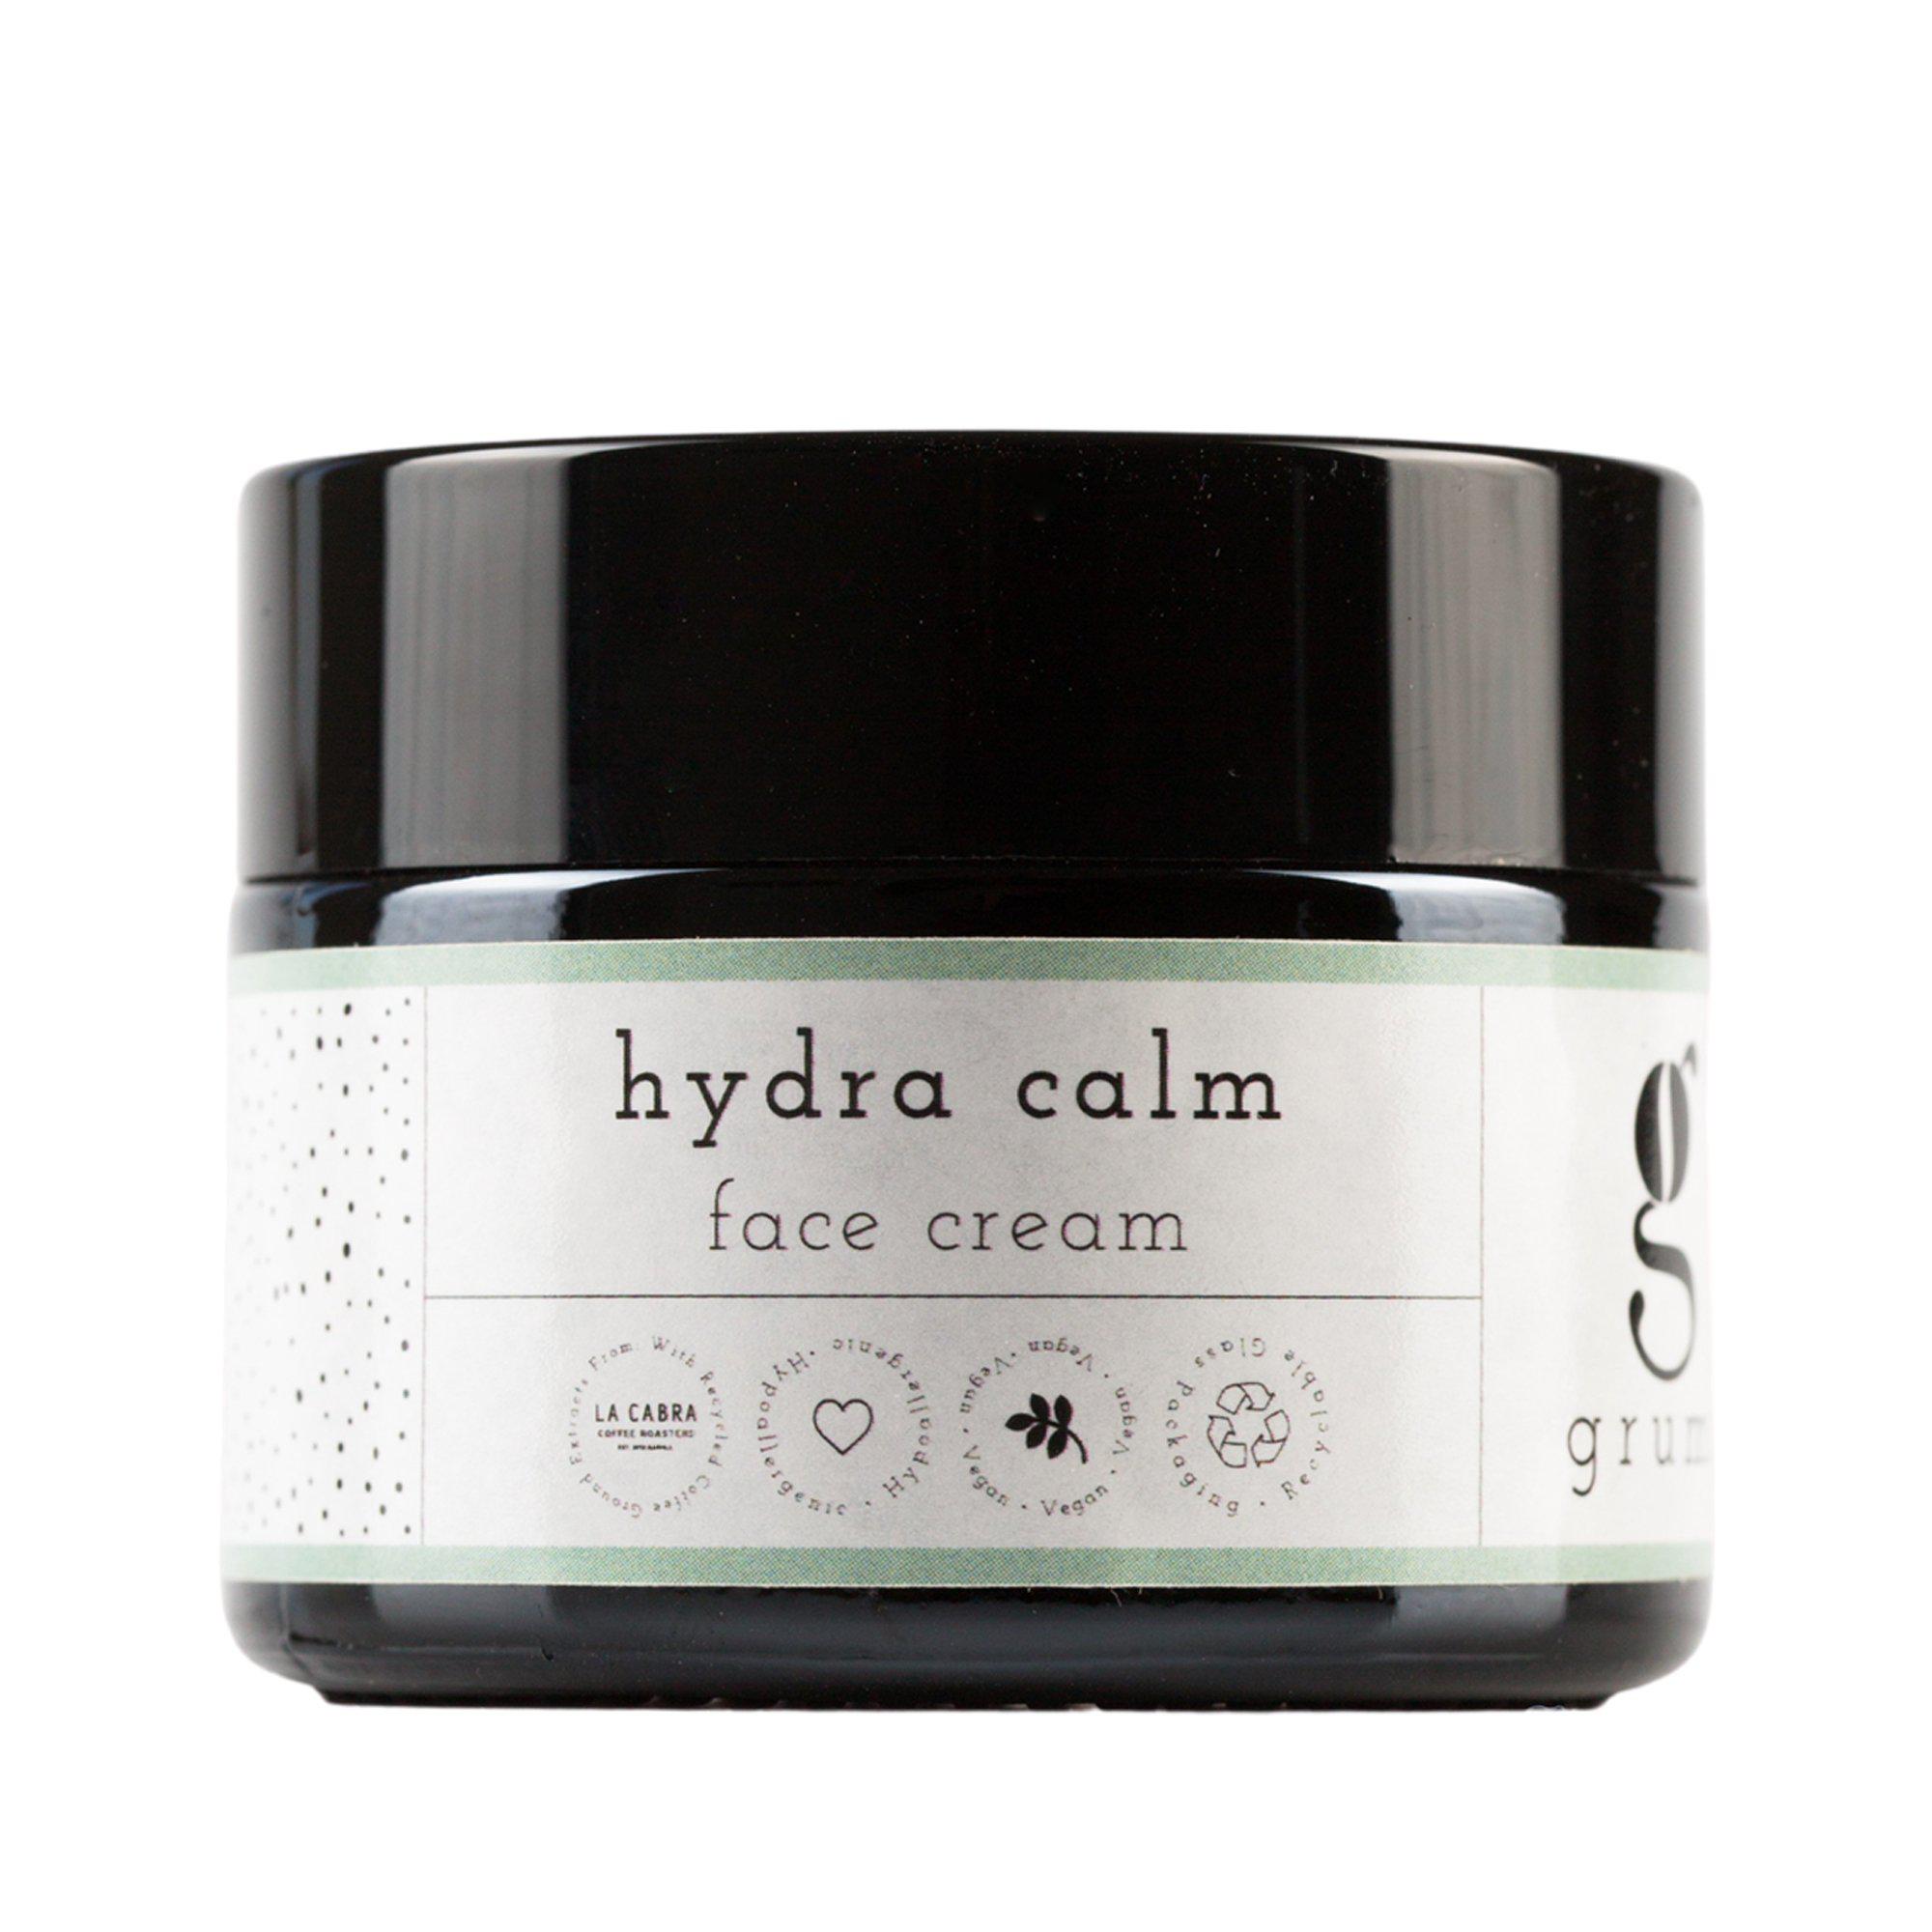 Hydra Calm Face Cream Crème Hydratante Apaisante Hydra Calm Face Cream Soothing Moisturizing Cream - Grums Aarhus